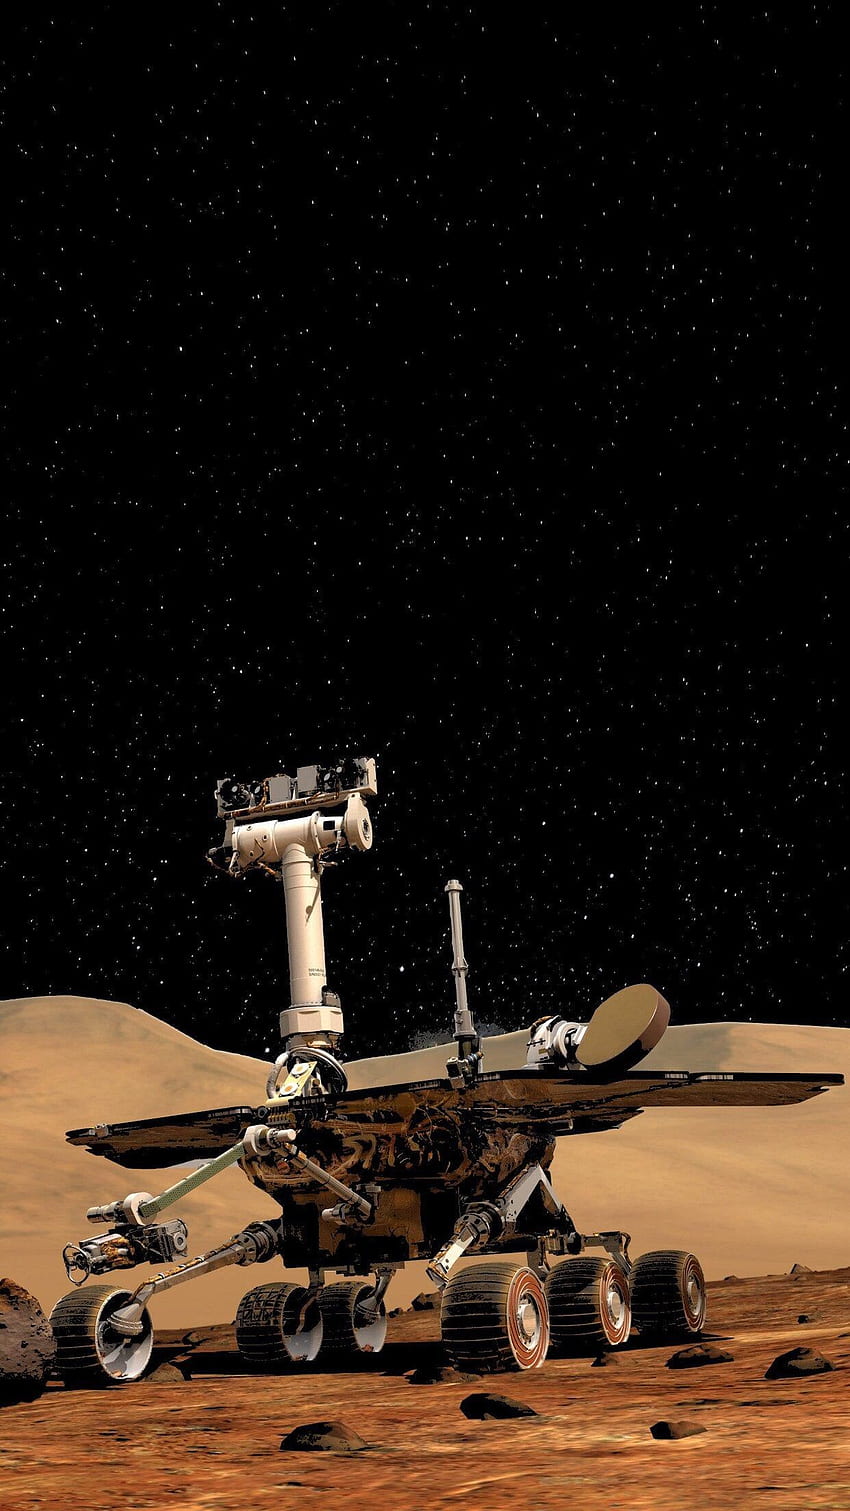 Oledified Opportunity Mars Rover telefonu, Curiosity Rover yaptım HD telefon duvar kağıdı